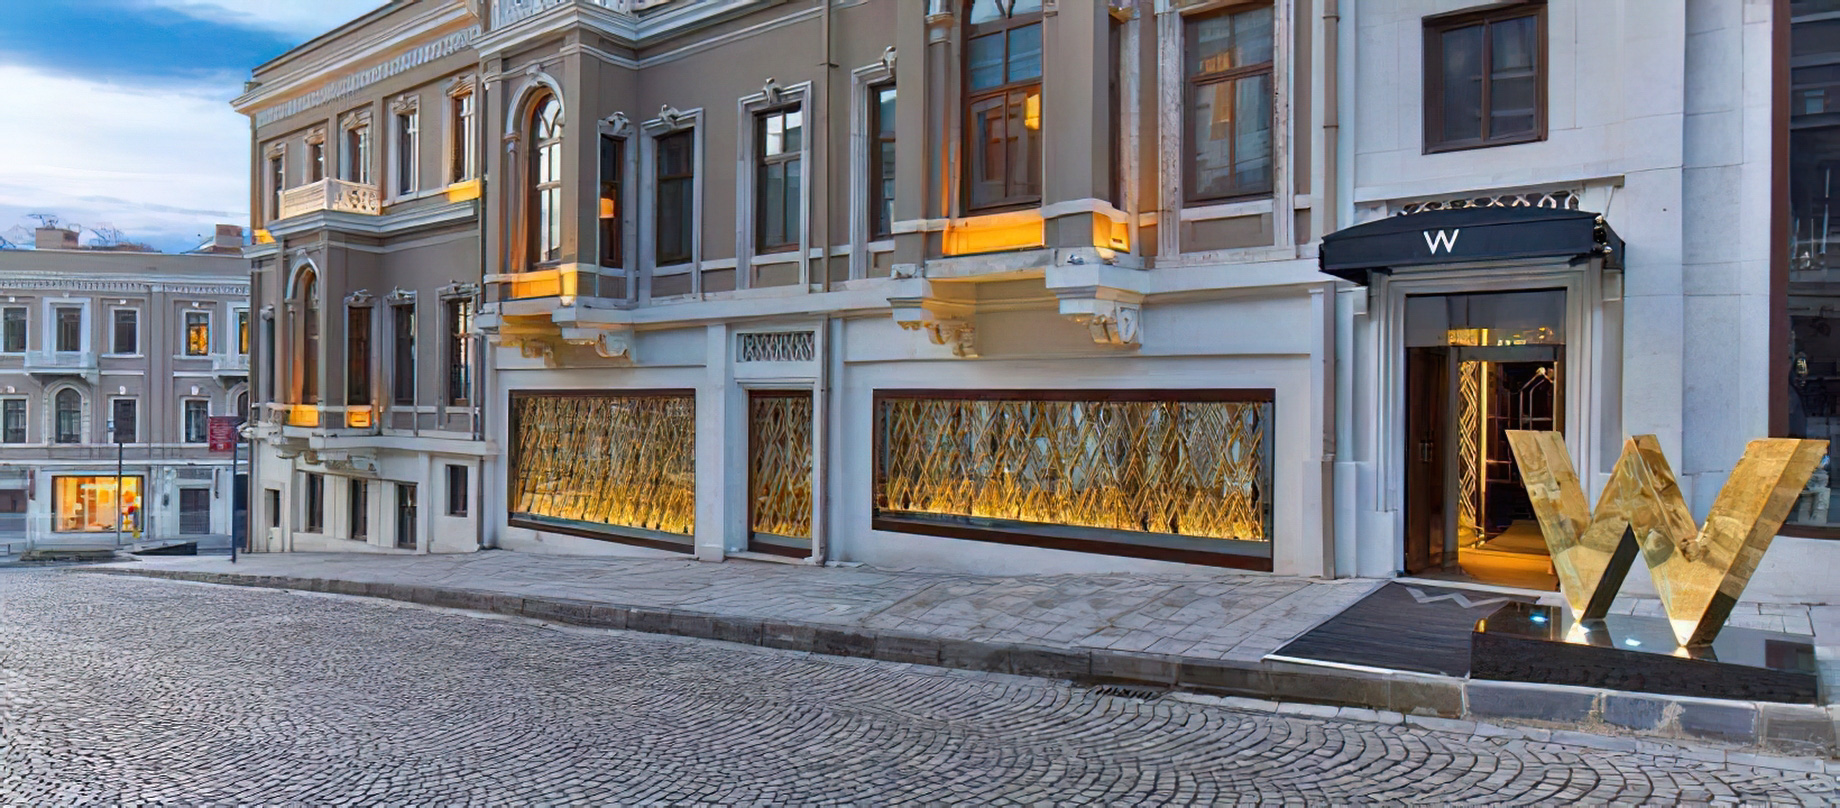 W Istanbul Hotel - Istanbul, Turkey - Exterior Street Entrance